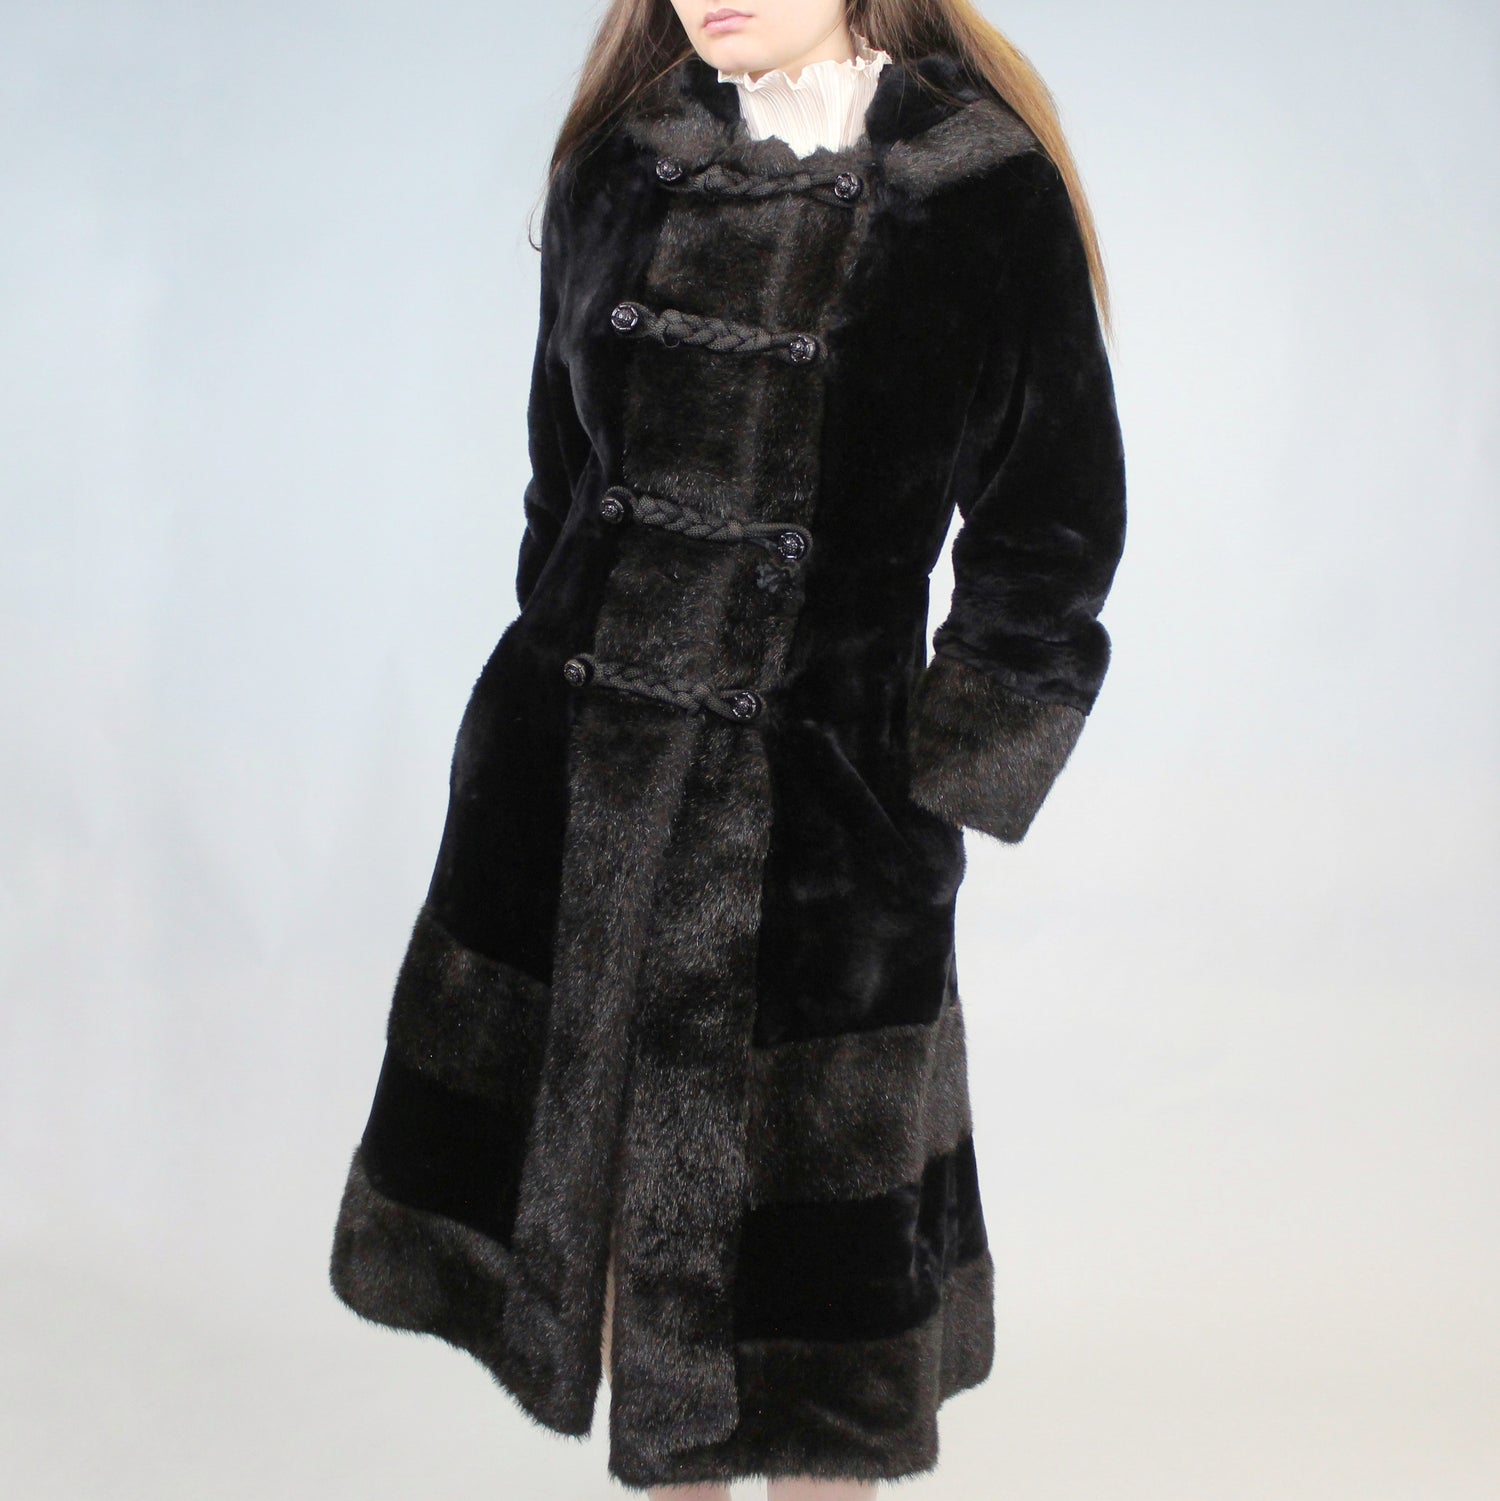 A Chic Classic Black Faux Fur Coat